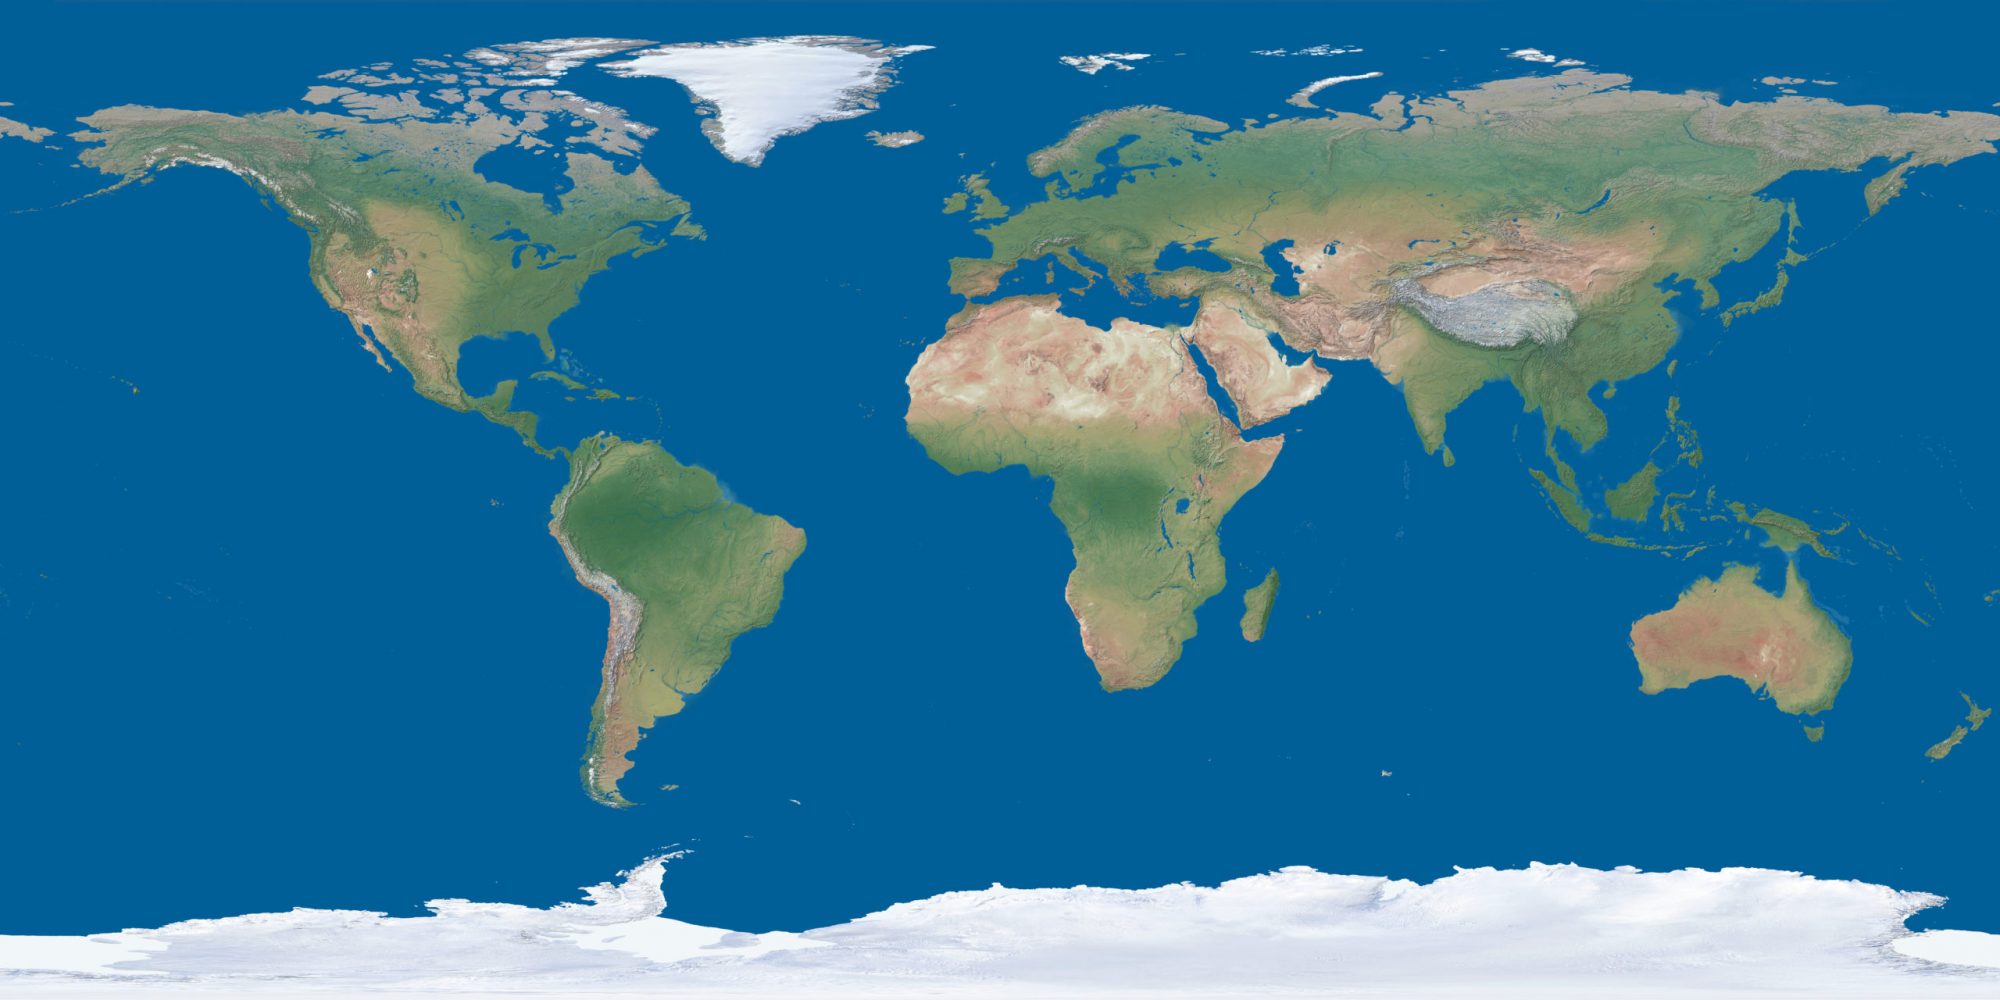 TILES: VEGETATION – Minecraft Earth Map